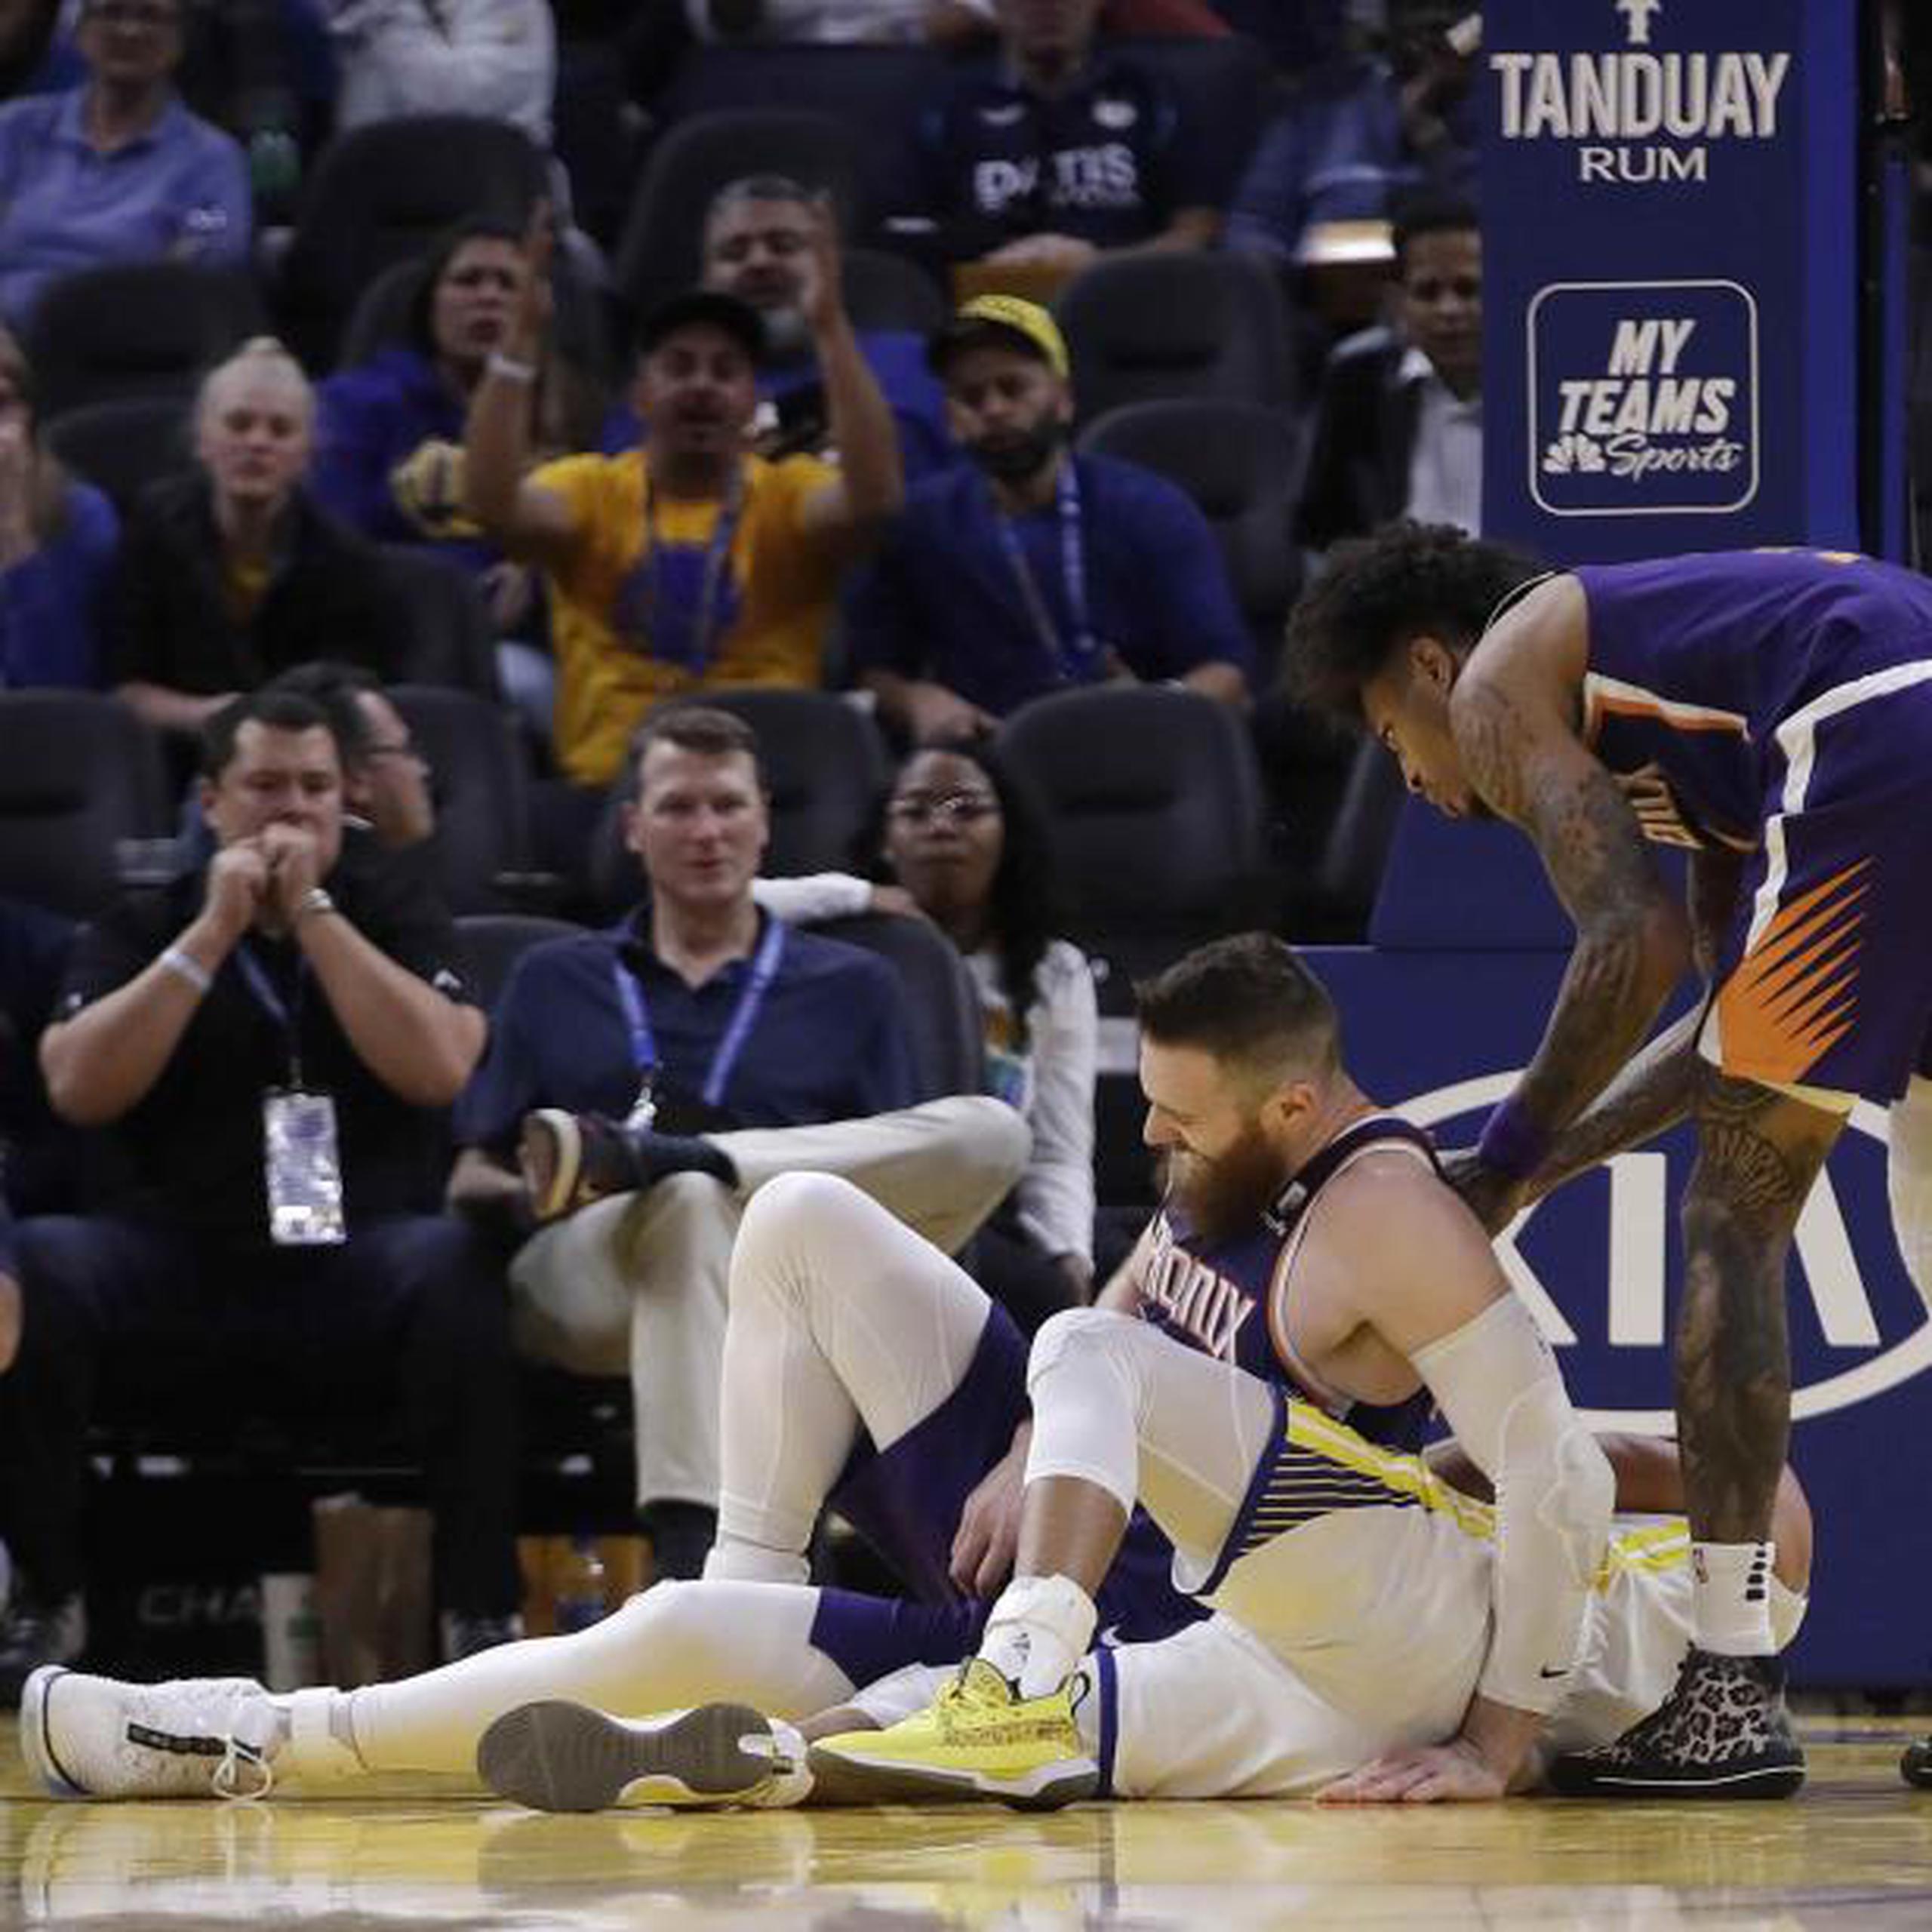 Aron Baynes, izquierda, de los Suns de Phoenix se levanta tras caer encima de Stephen Curry de los Warriors de Golden State, el miércoles 30 de octubre de 2019, en San Francisco. Curry salió de la cancha. (AP Foto/Ben Margot)